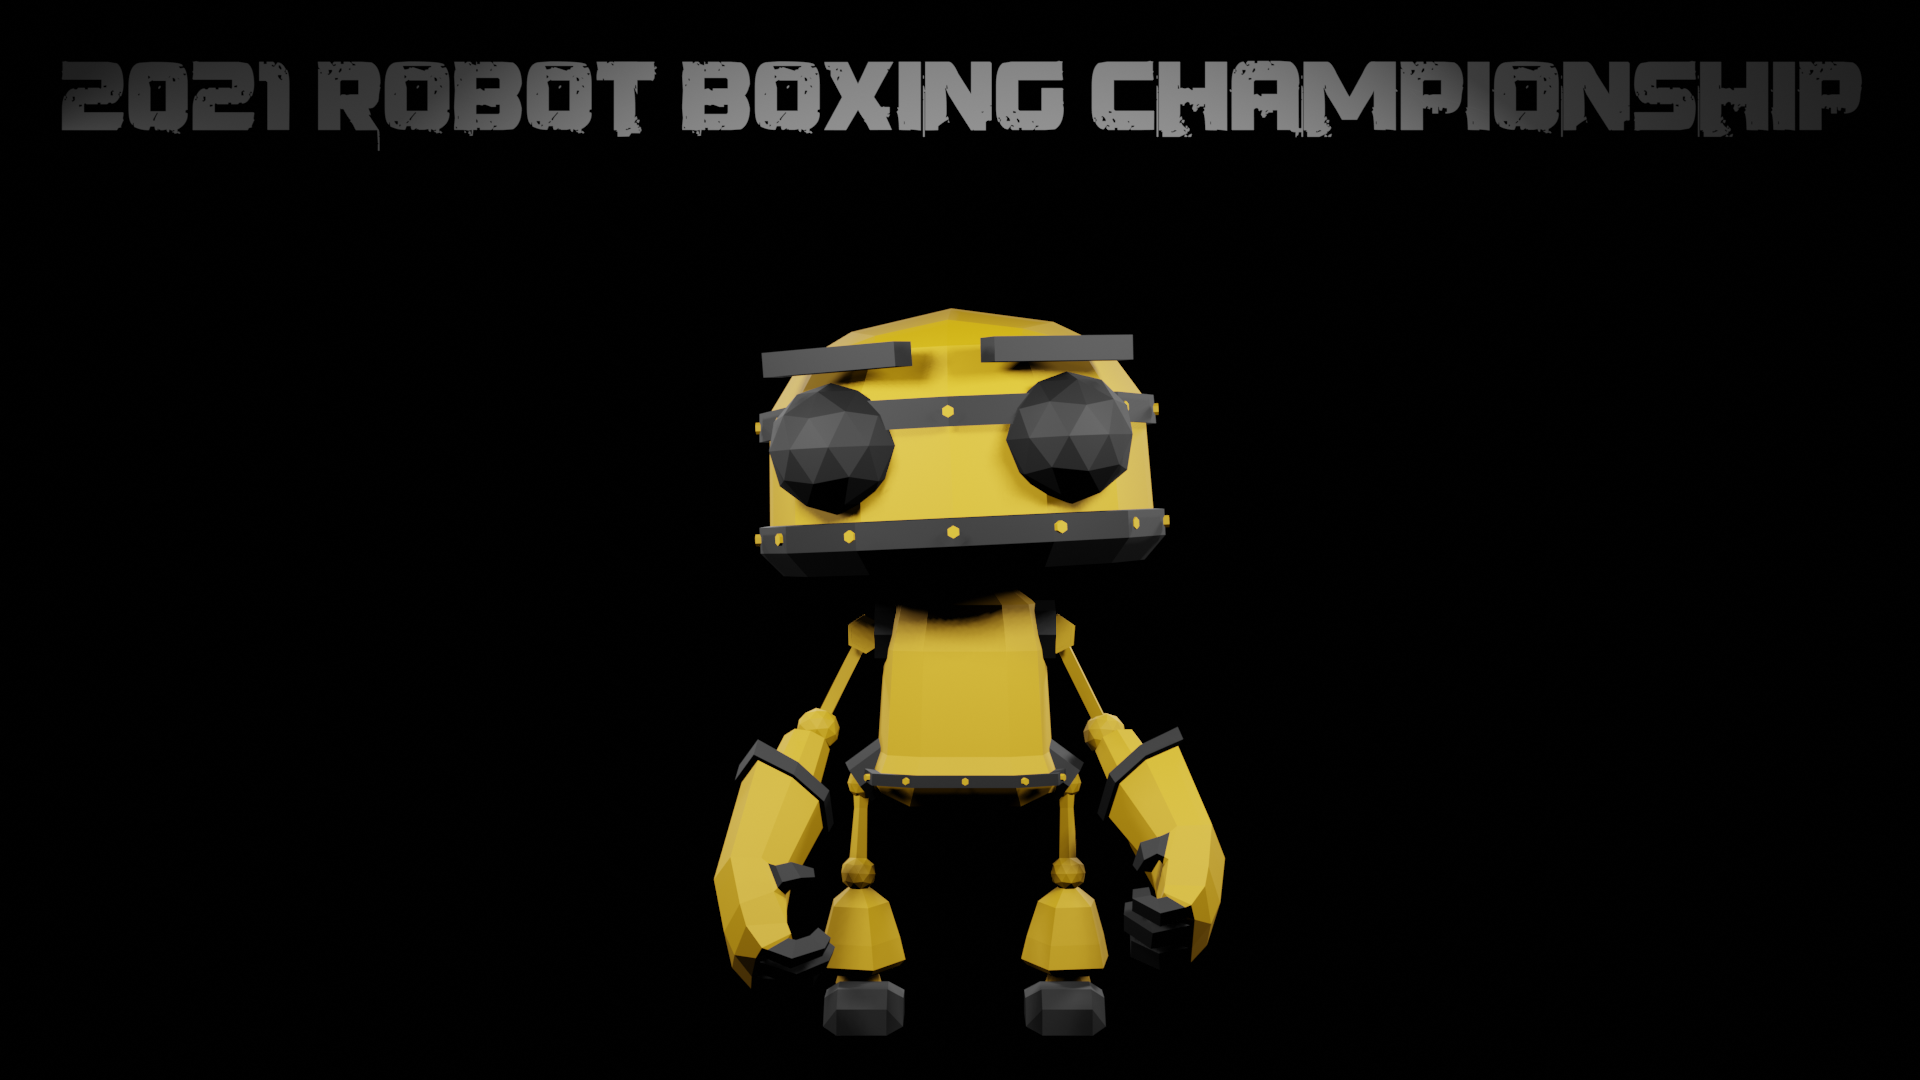 2021 ROBOT BOXING CHAMPIONSHIP